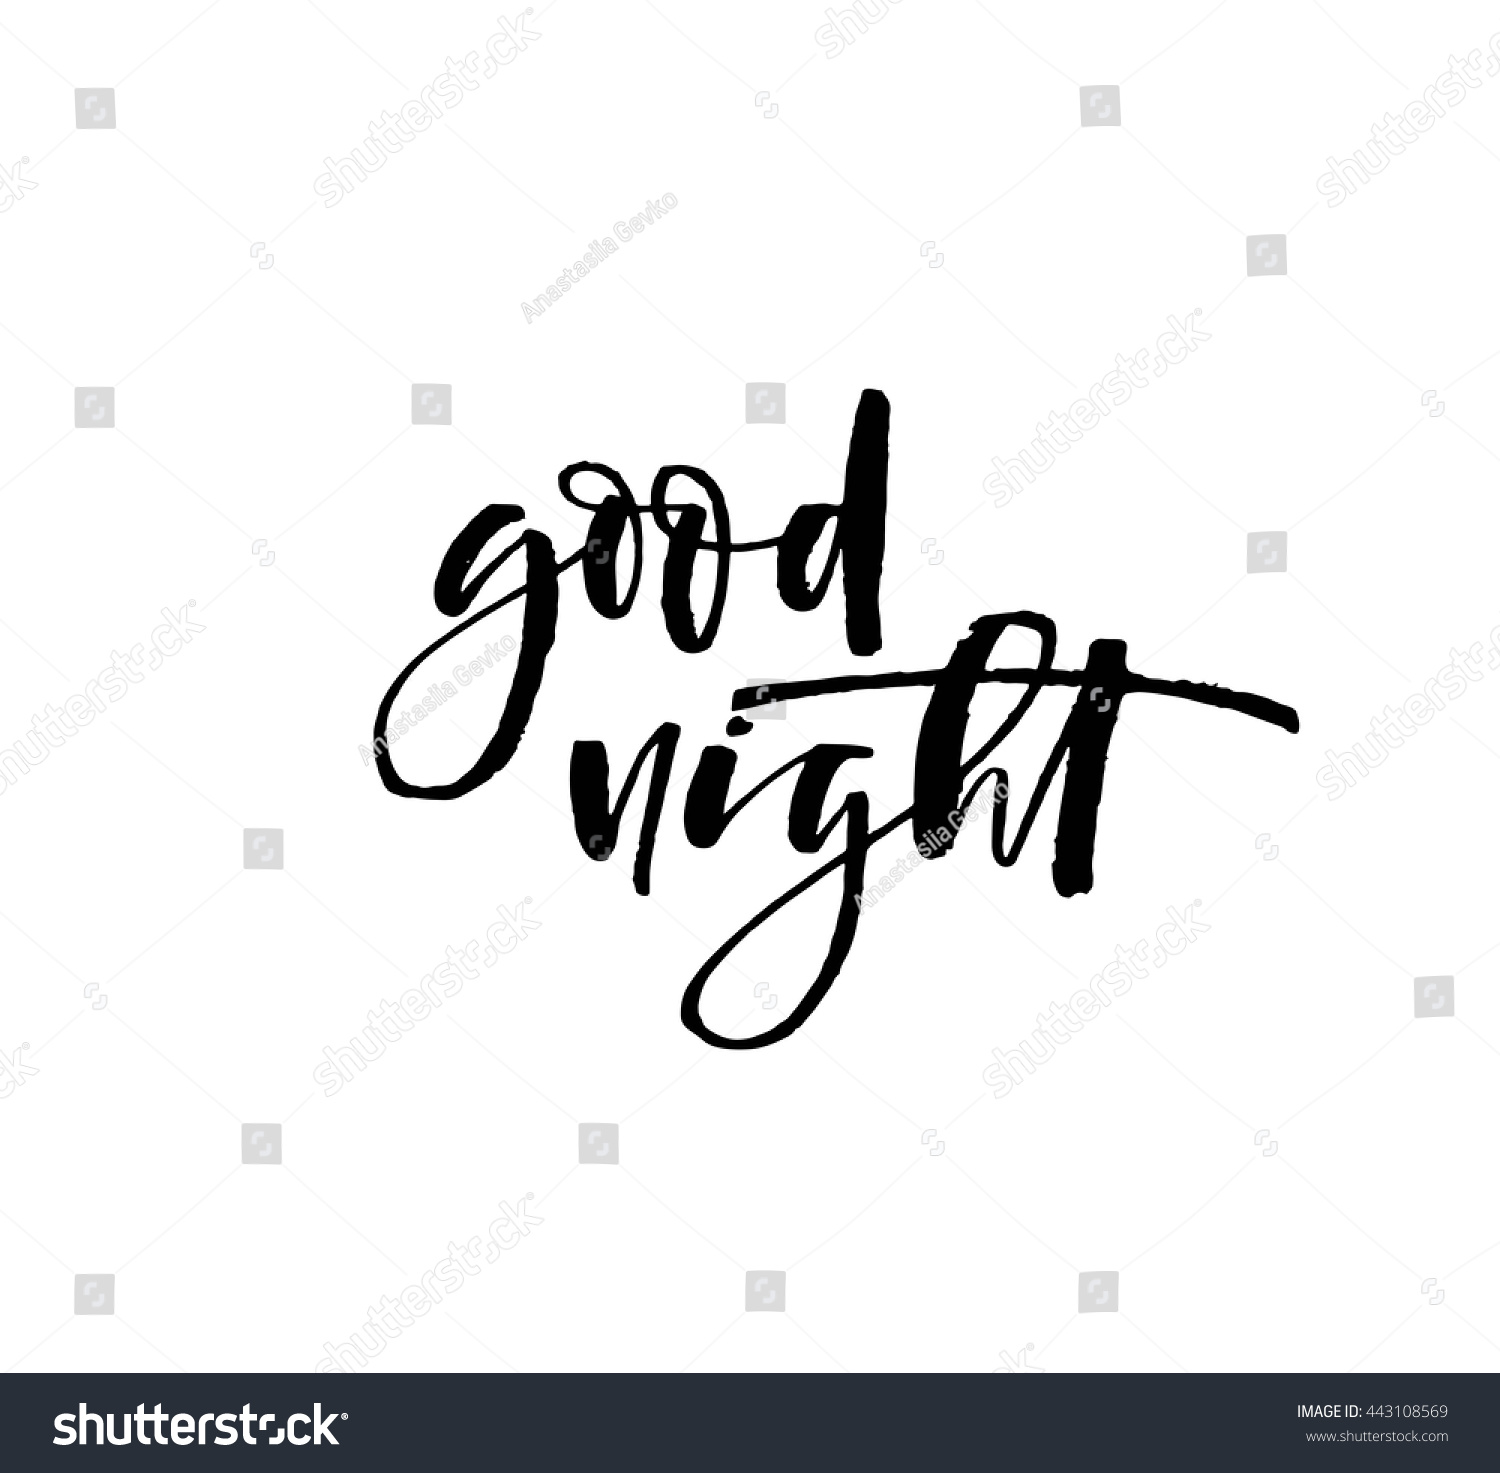 Good Night Card Hand Drawn Lettering Stock Vector 443108569 - Shutterstock